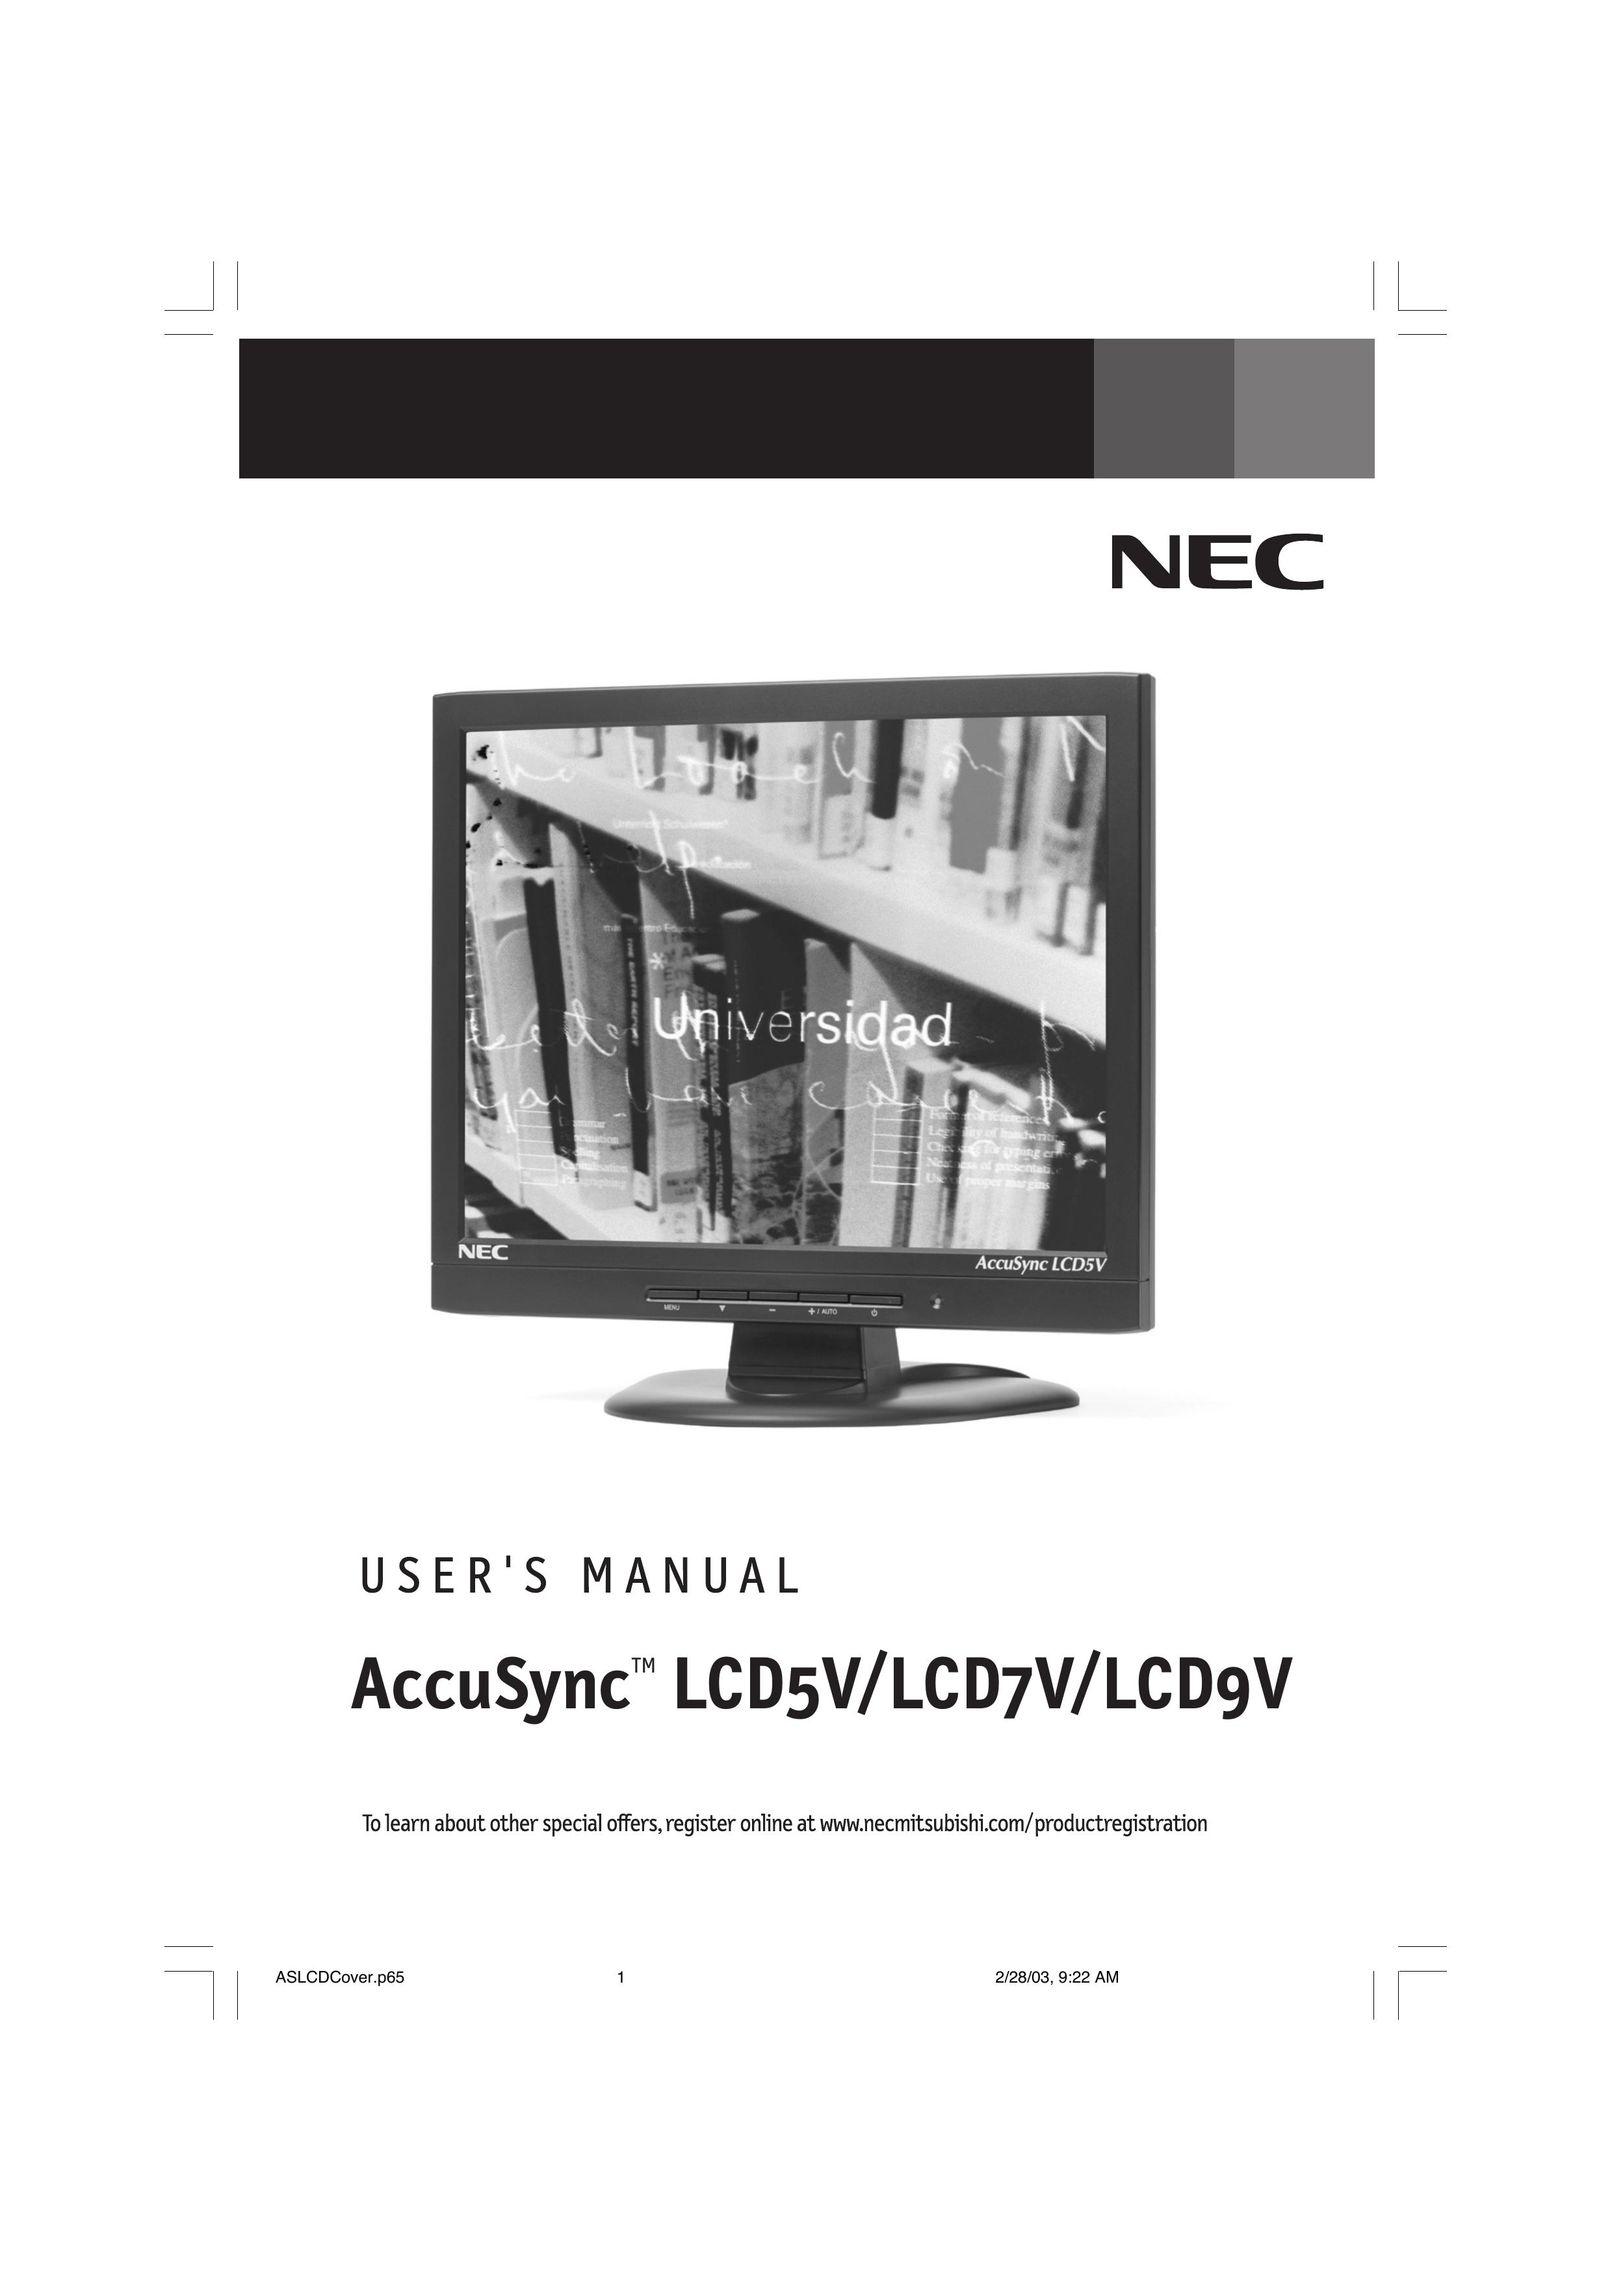 NEC LCD9V Car Video System User Manual